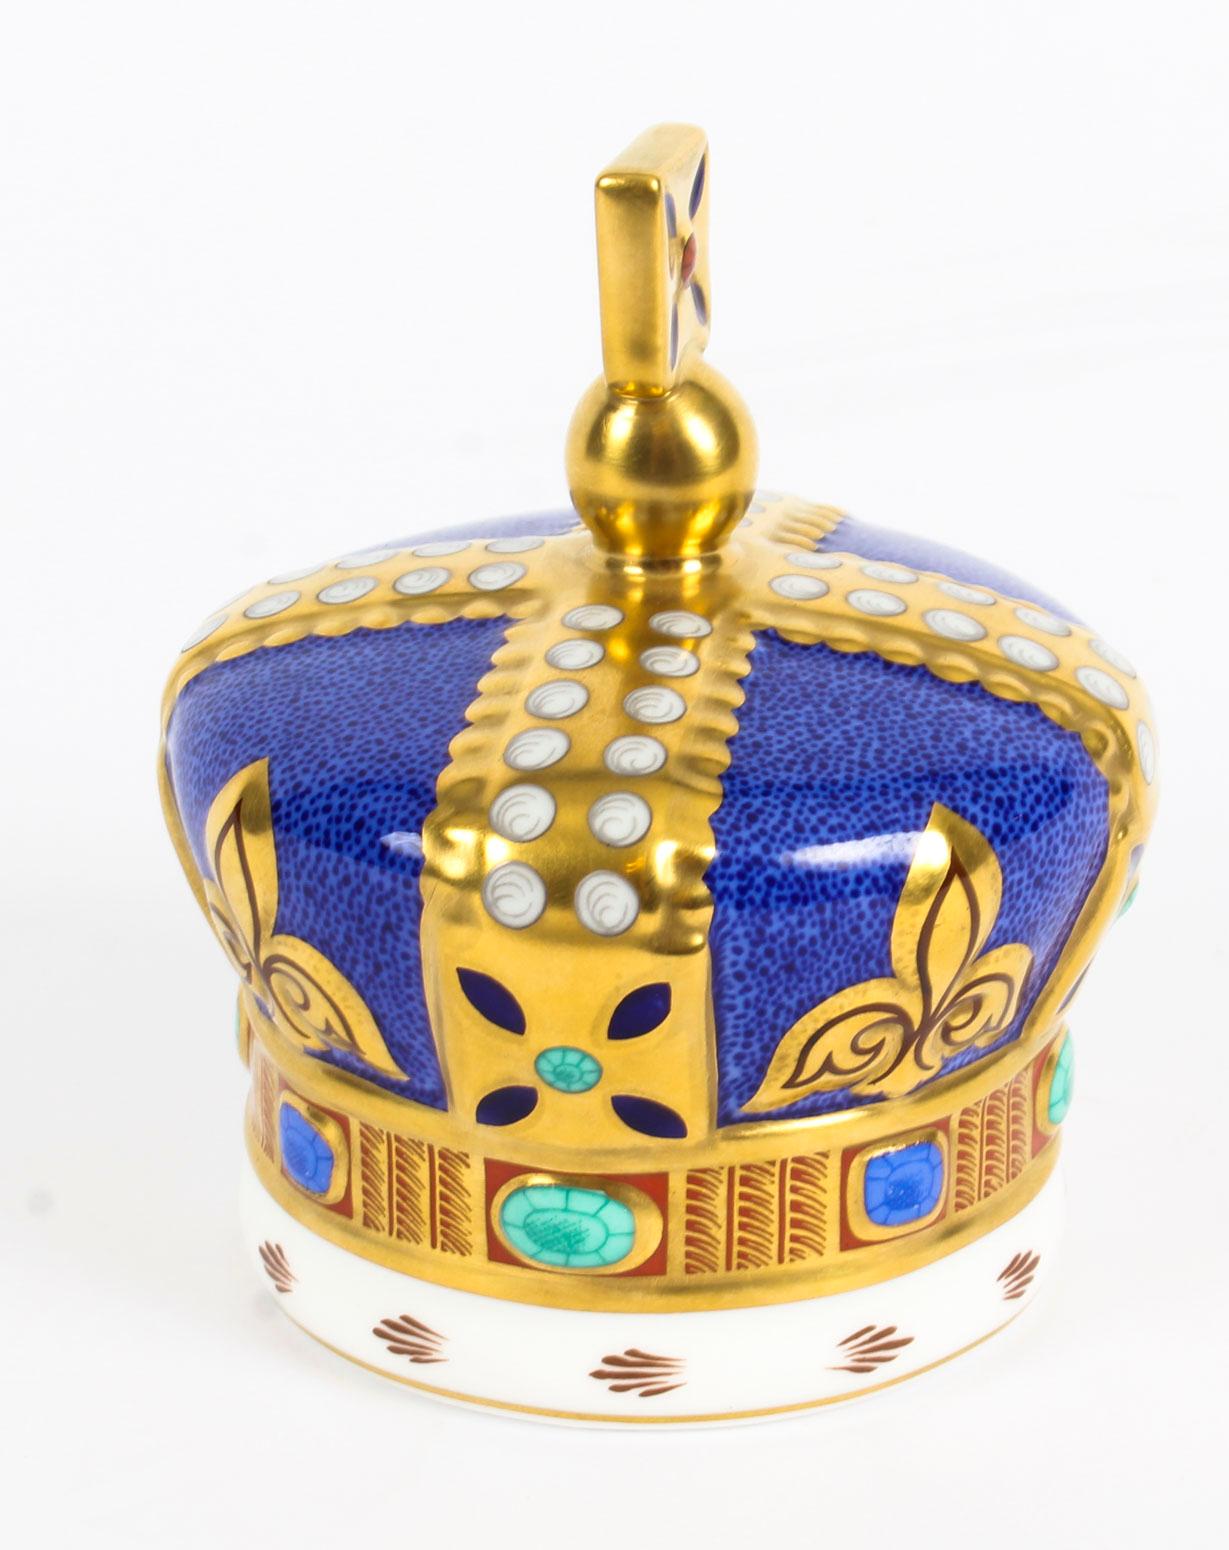 Porcelain Vintage Cased Royal Crown Derby Commemorative Crown Paperweight, 1990